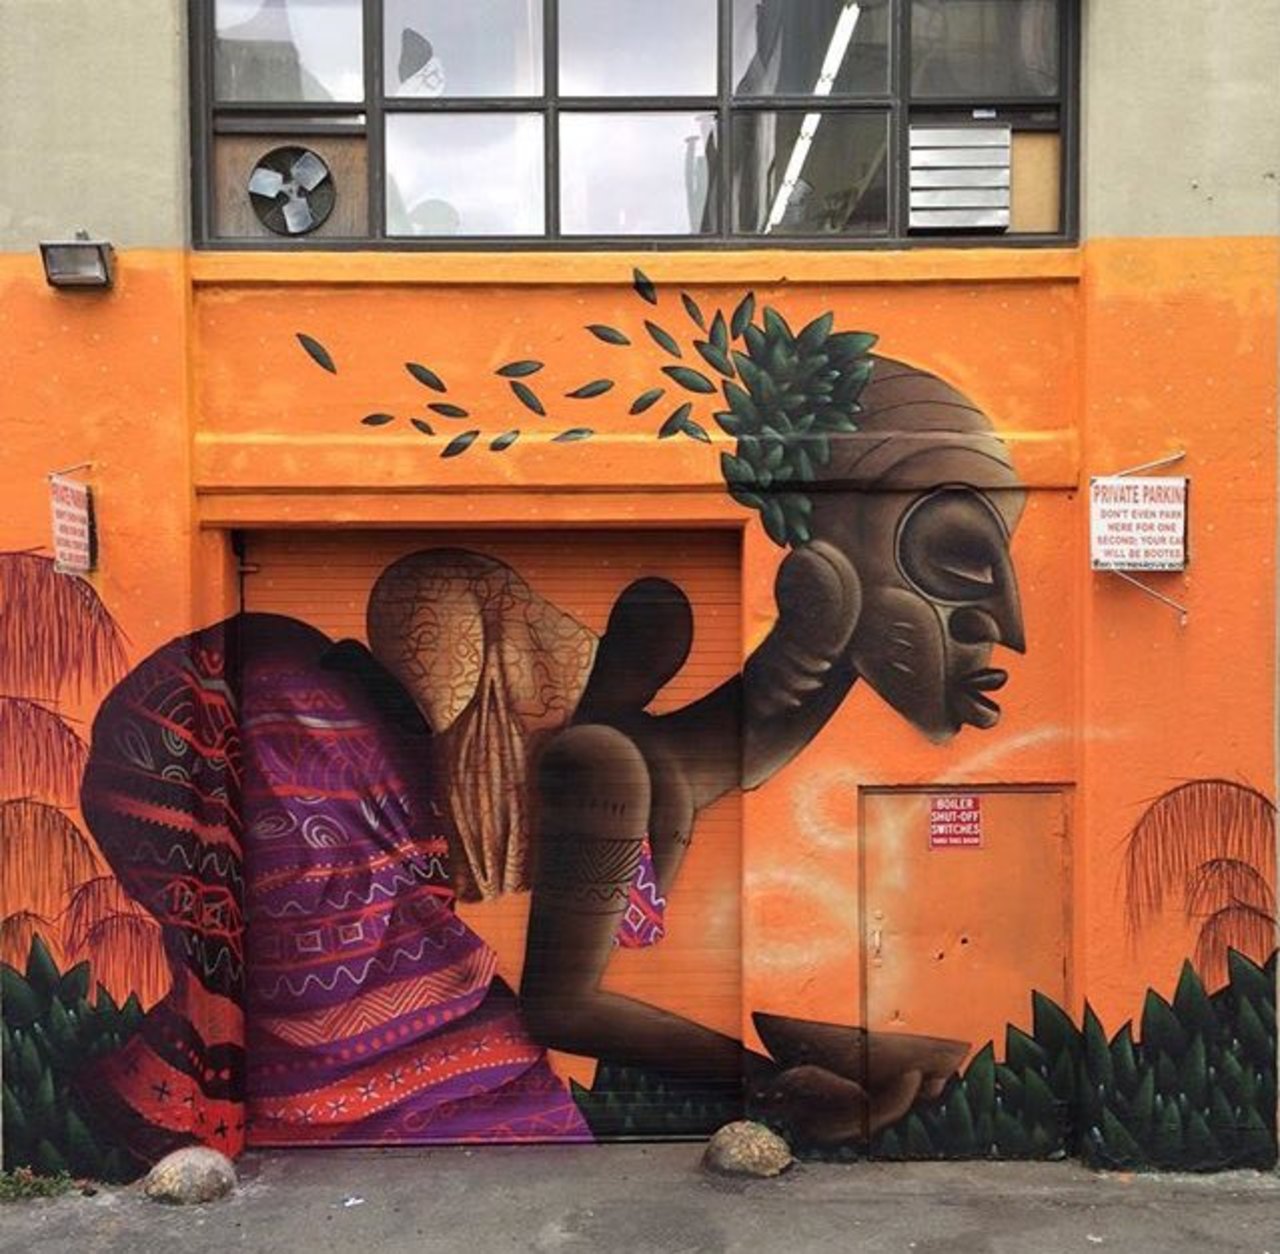 RT @merentia74: New Street Art by Alexandre Keto in NYC 

#art #graffiti #mural #streetart https://t.co/bIEjCyzLCW